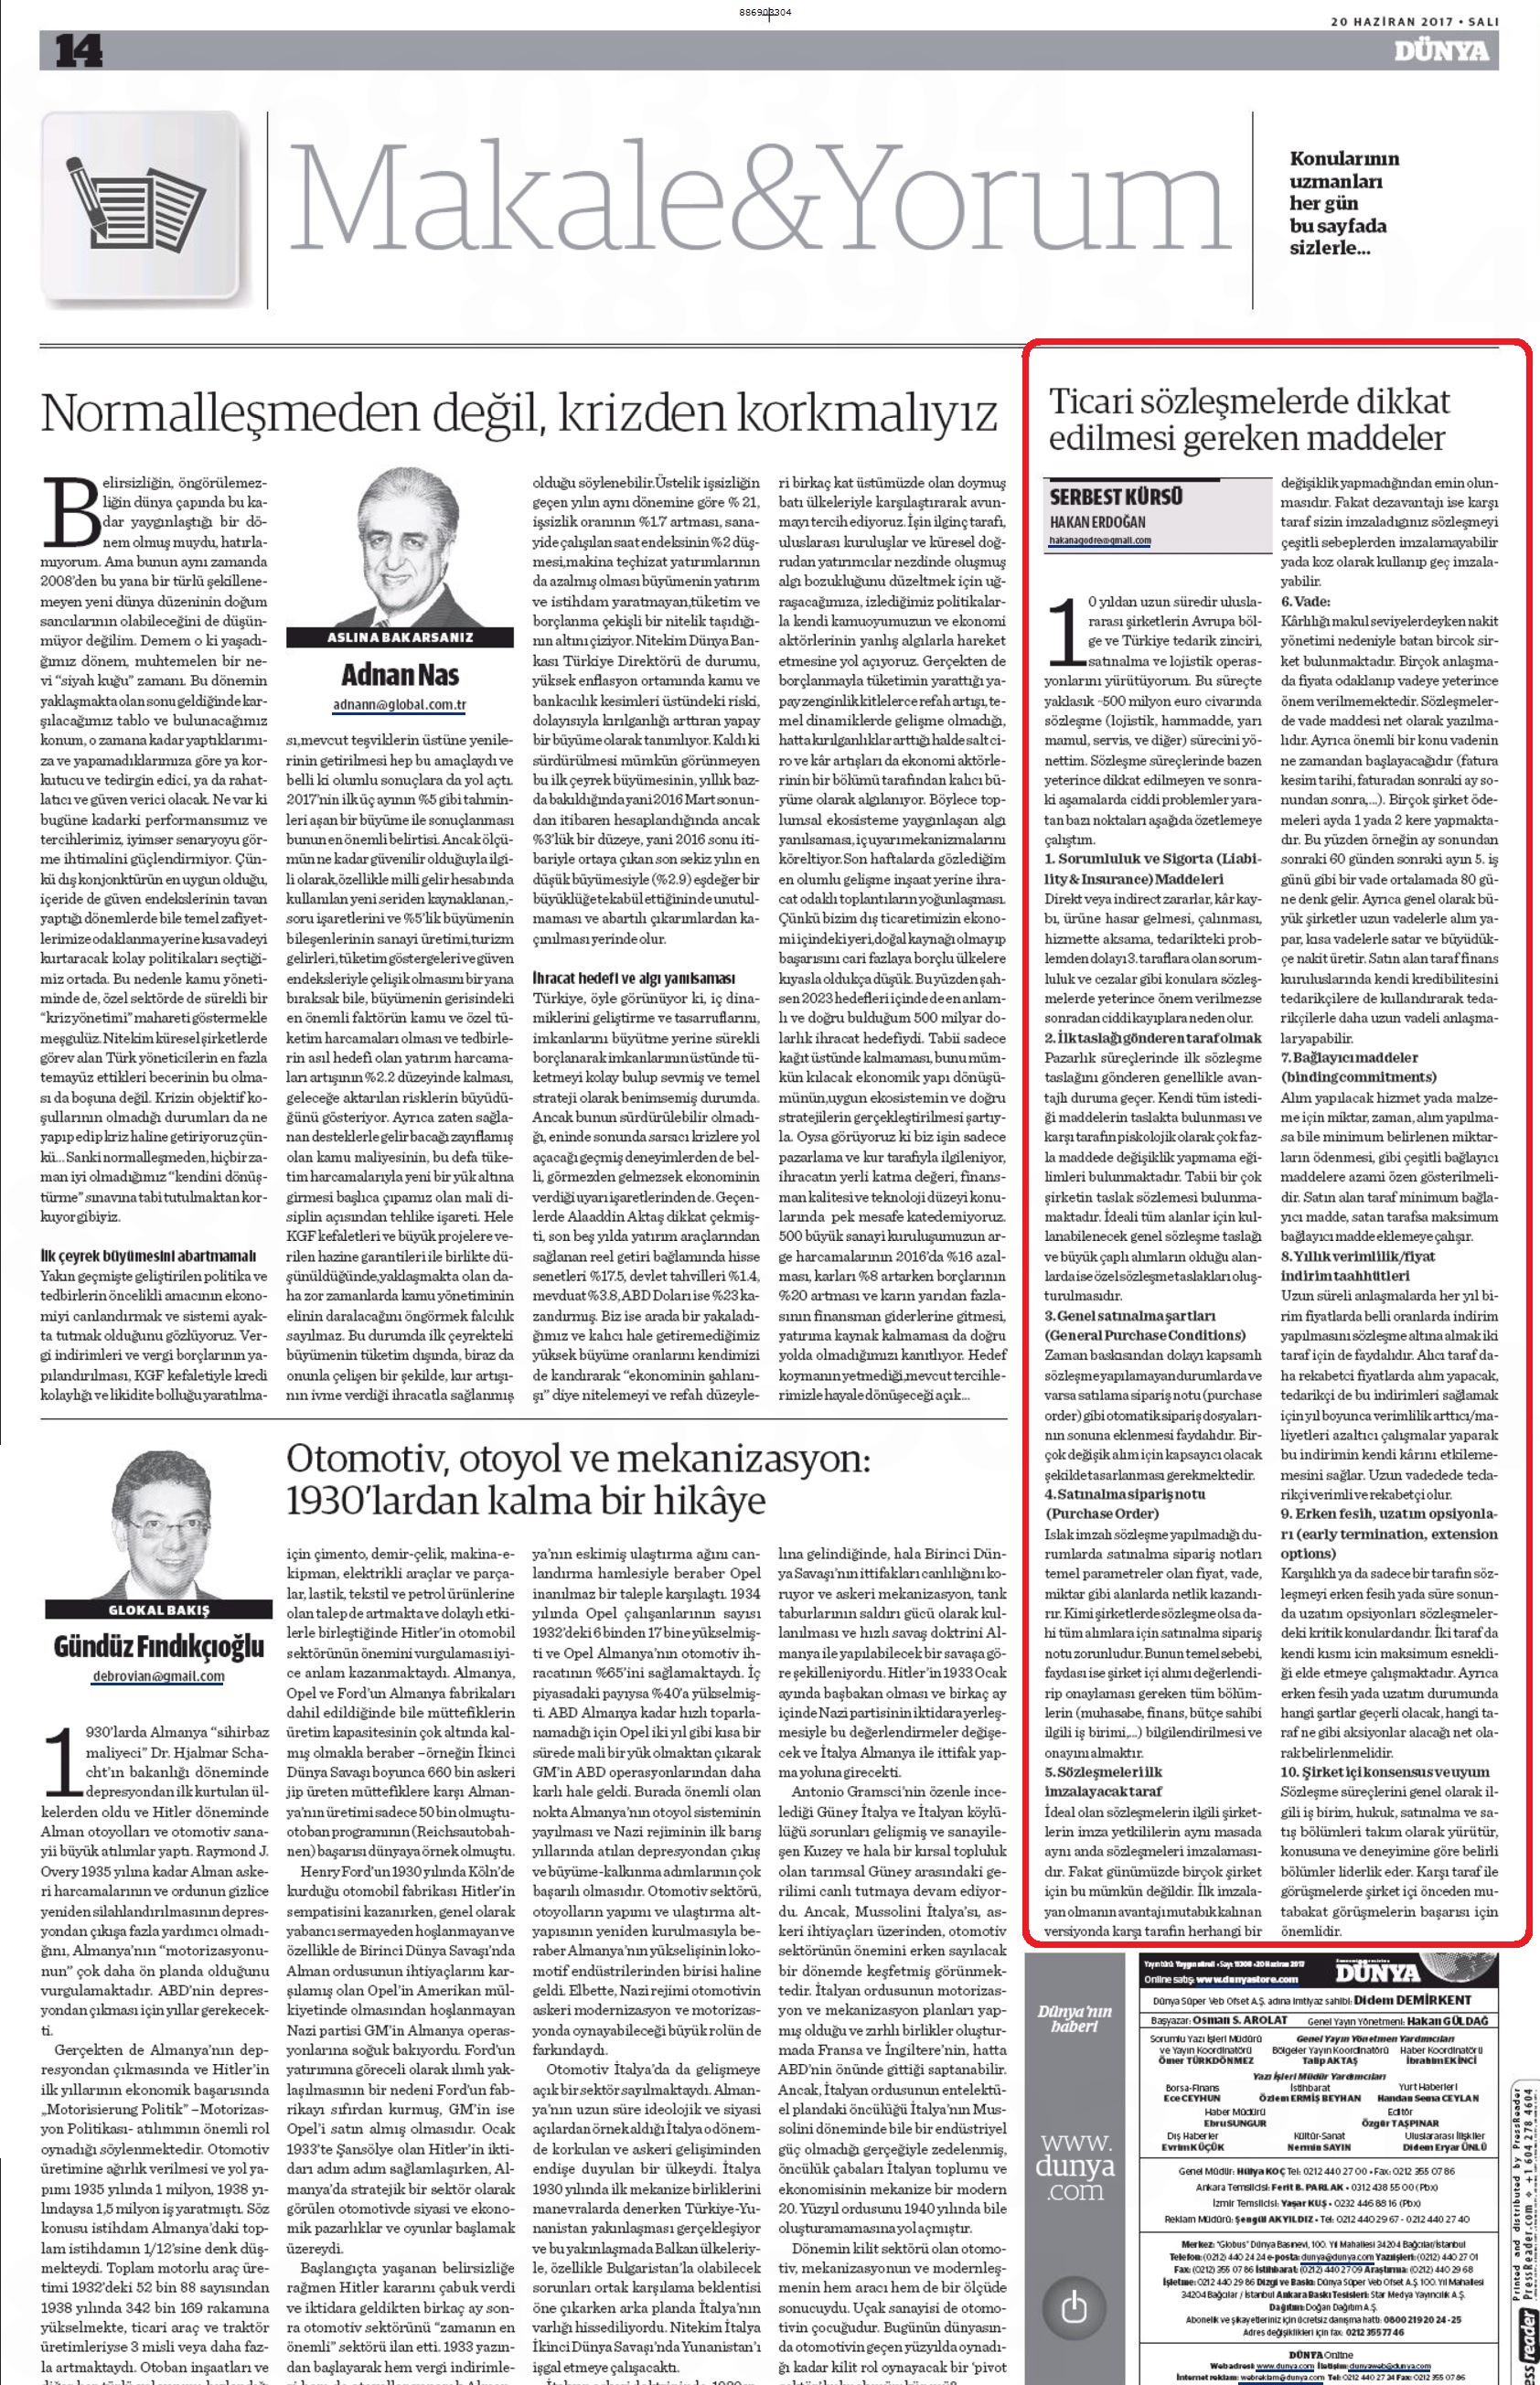 Dunya Gazetesi 20 Haziran 2017 Salı - Sayfa 14b.jpg